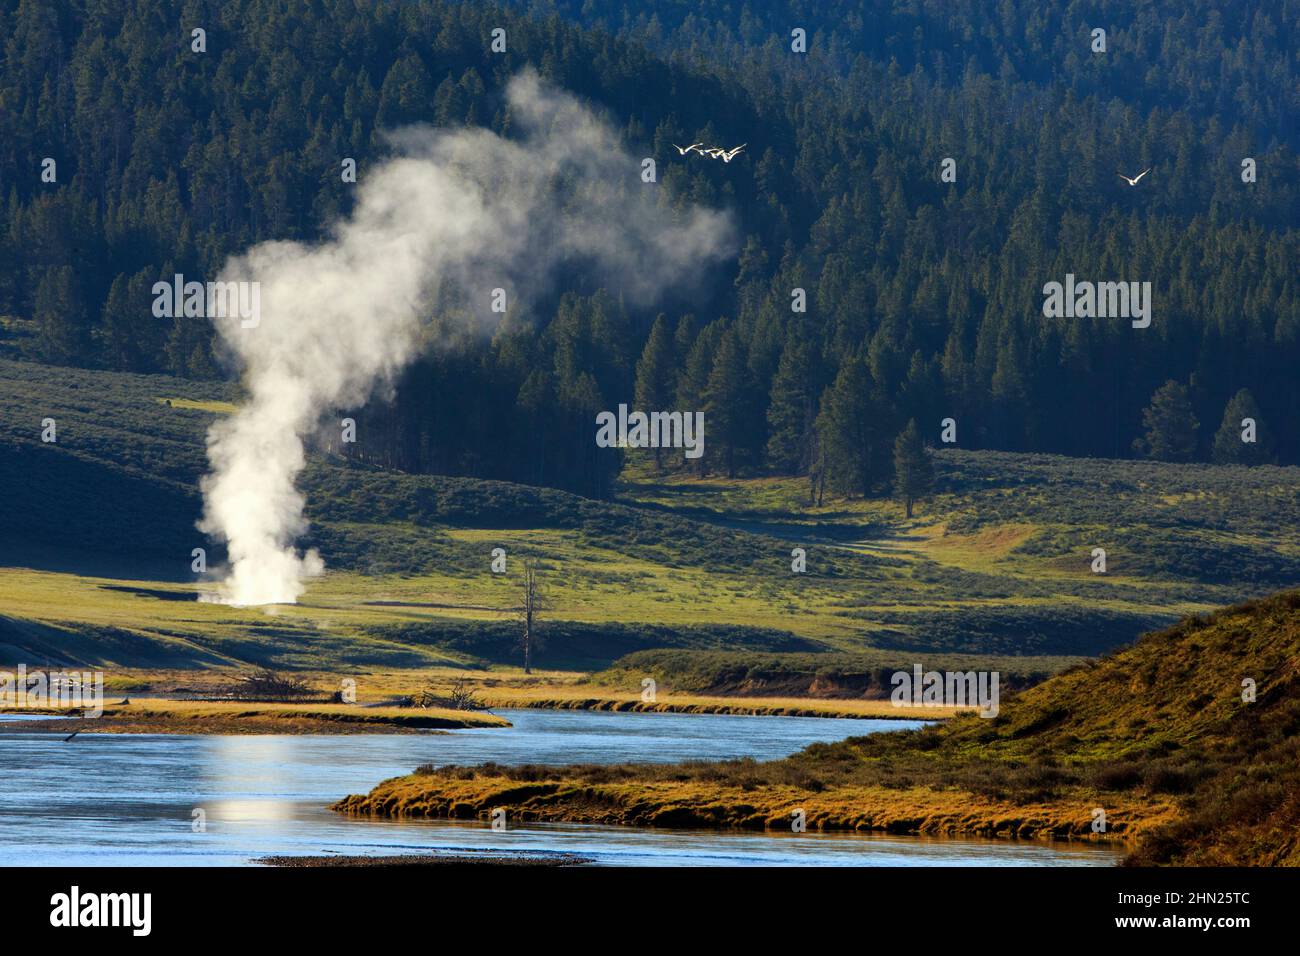 Pennacchio di vapore geyser e gregge di pellicani americani volanti (Pelecanus erythrorhynchos) nell'alta Hayden Valley, Yellowstone NP, Wyoming Foto Stock